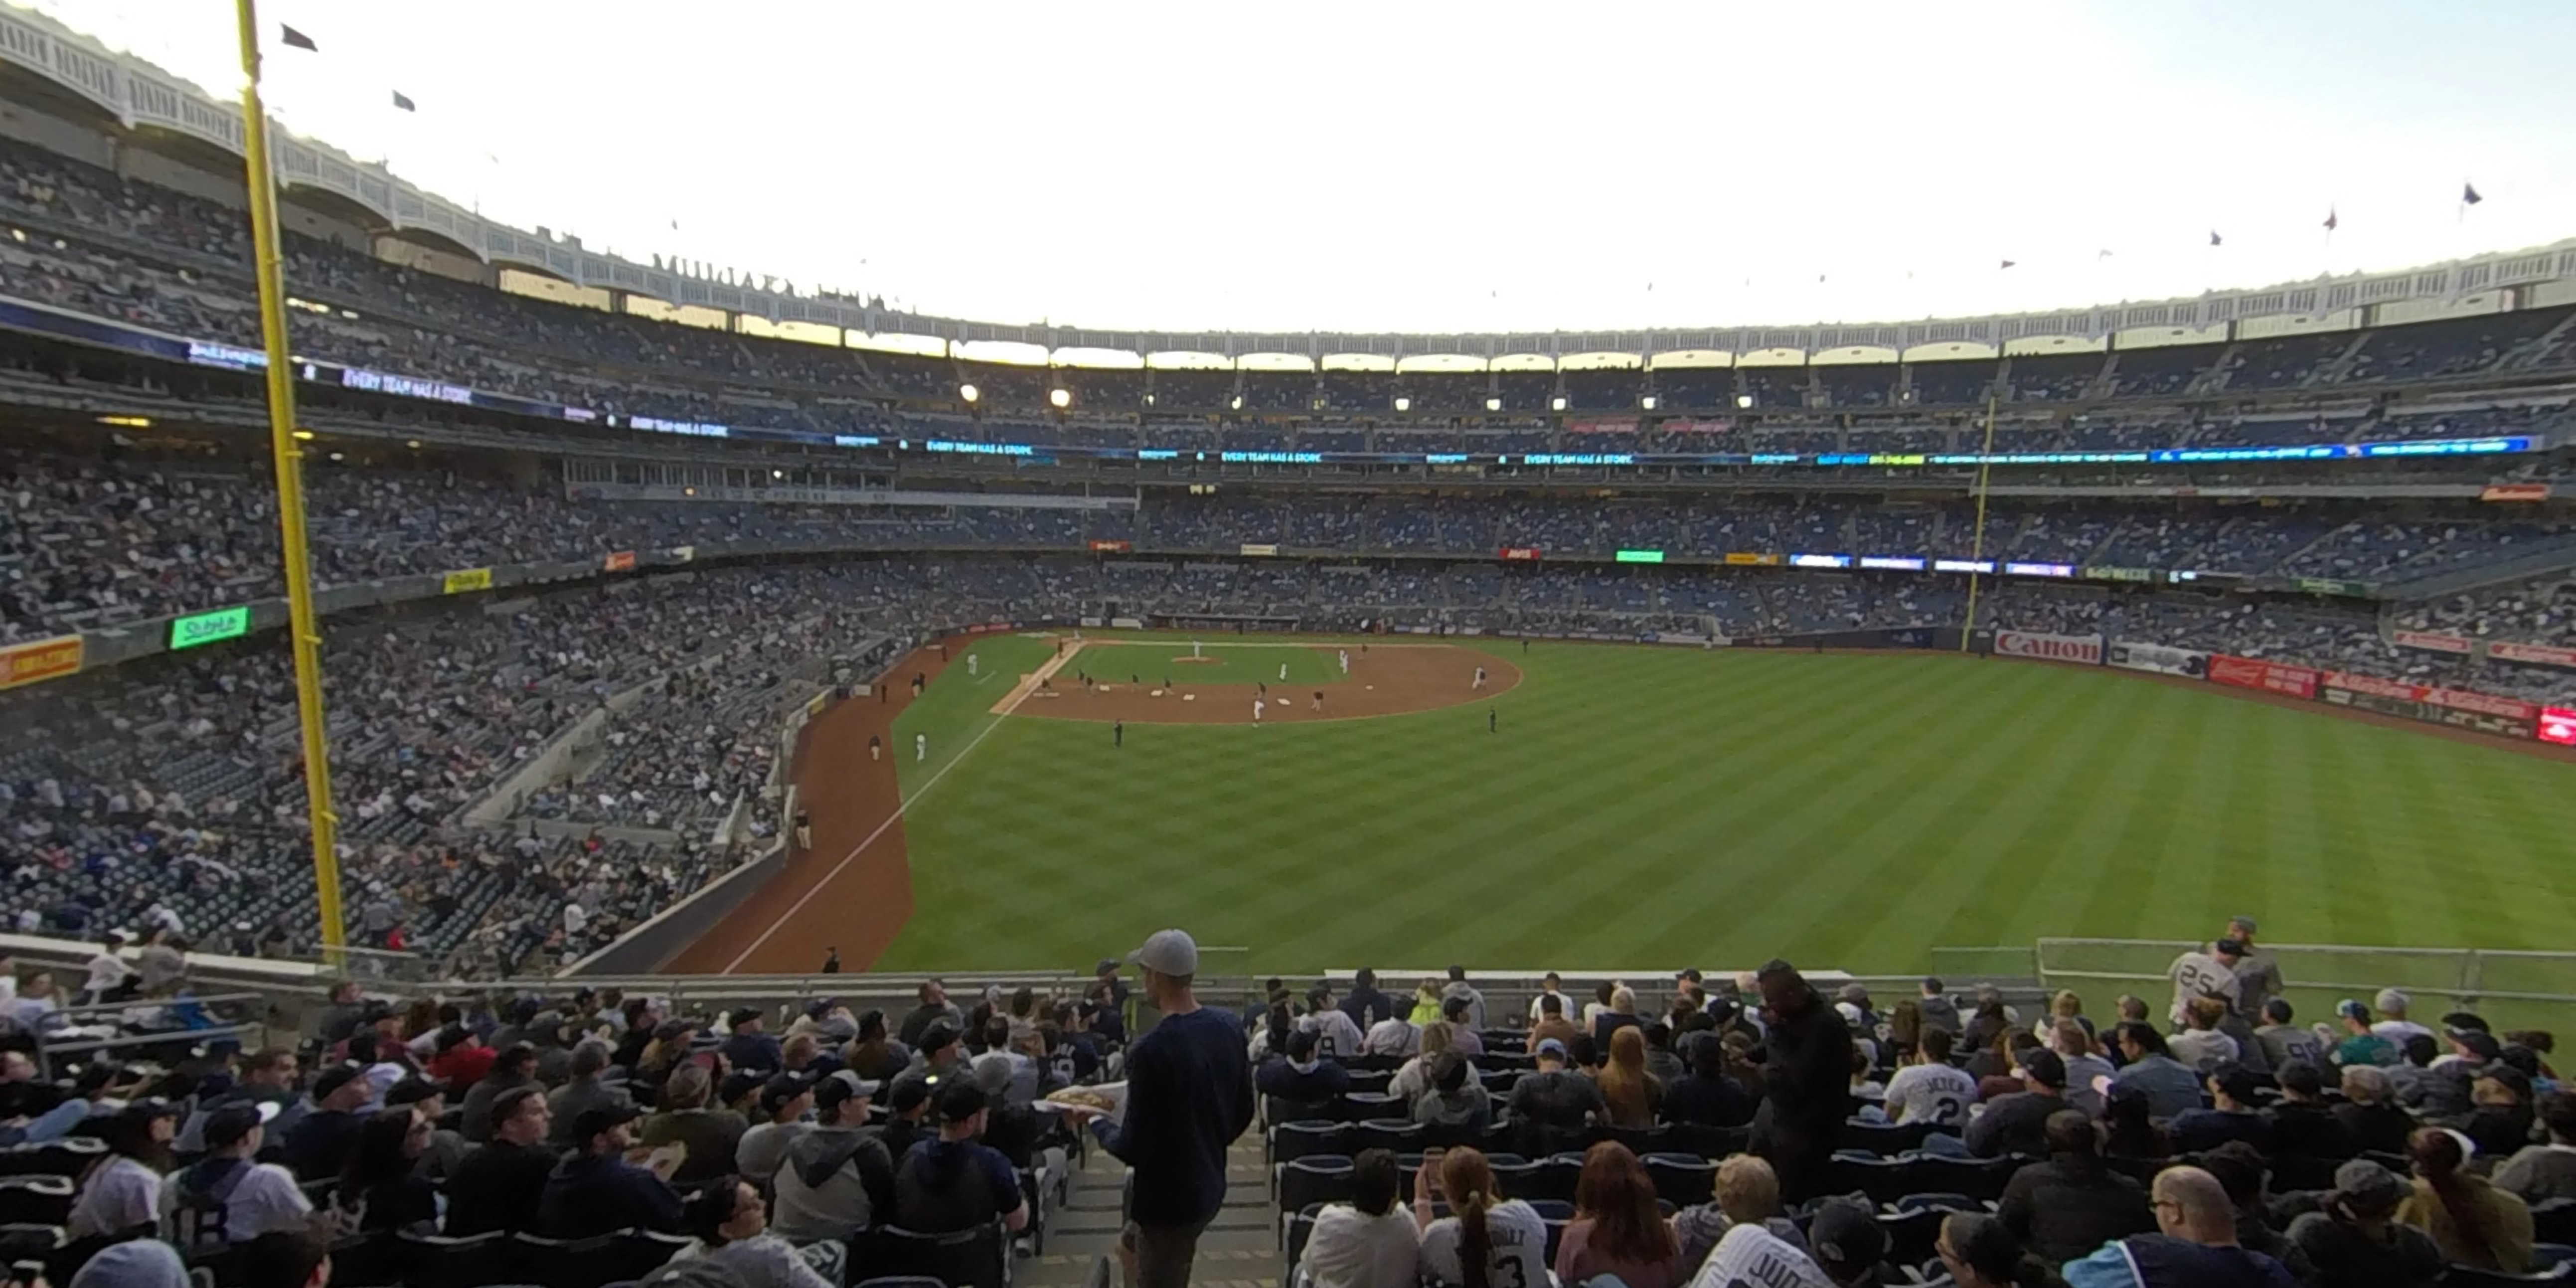 section 205 panoramic seat view  for baseball - yankee stadium